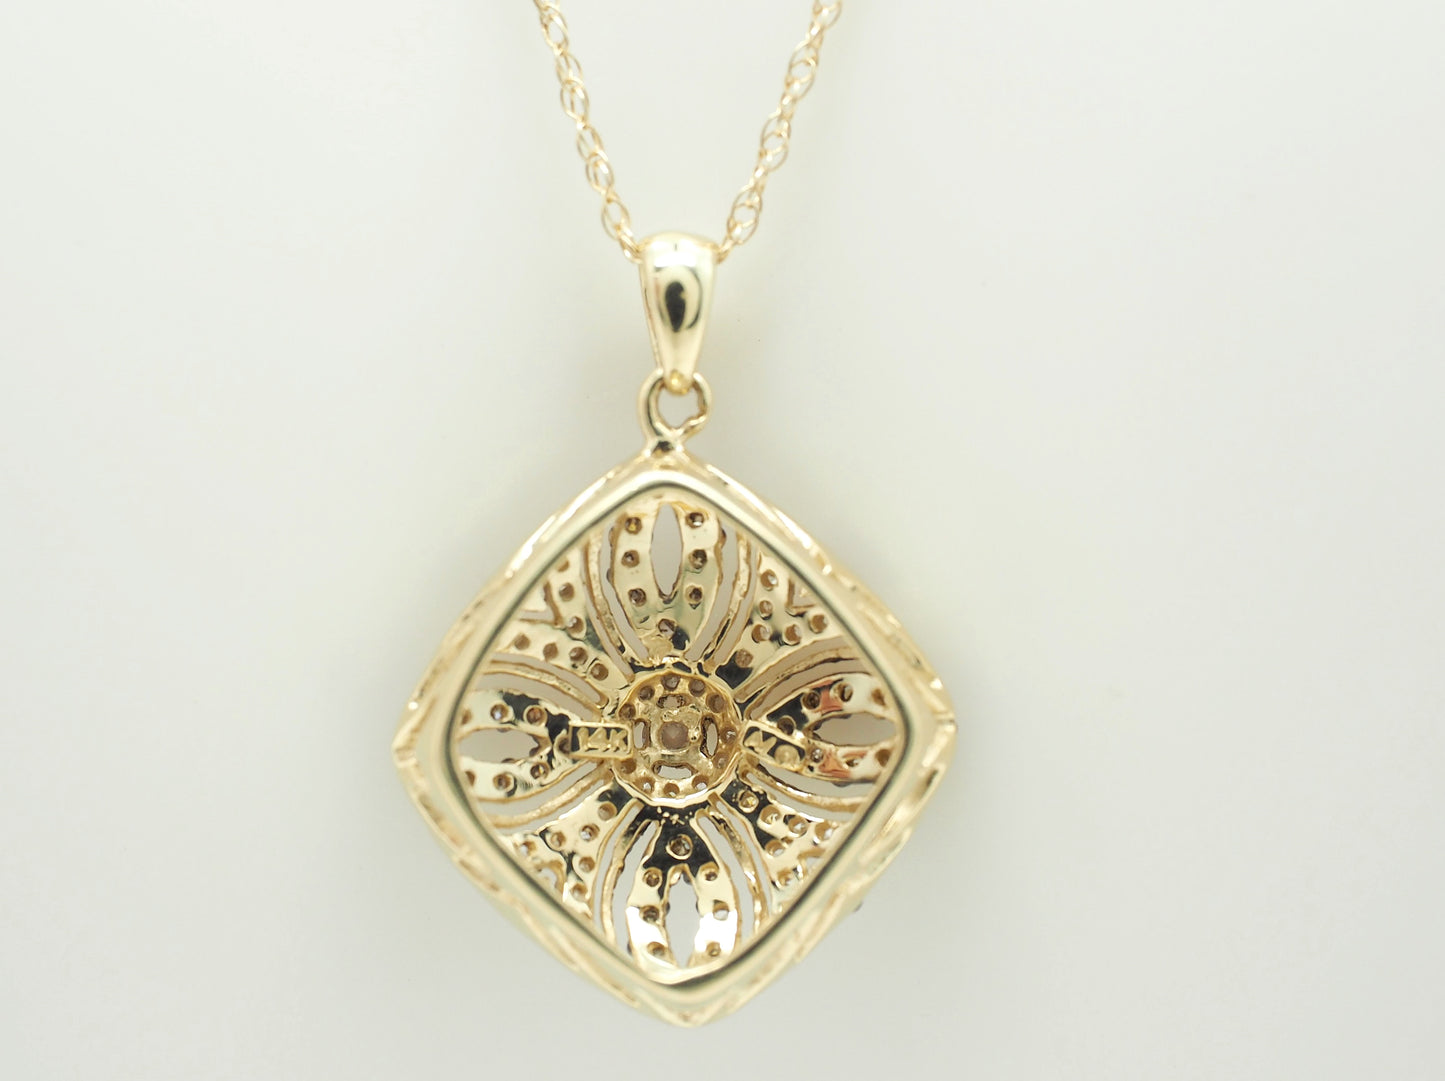 14k Yellow Gold Alwand Vahan Diamond Pendant & Van Dell Chain, 19 inches - 3.5g